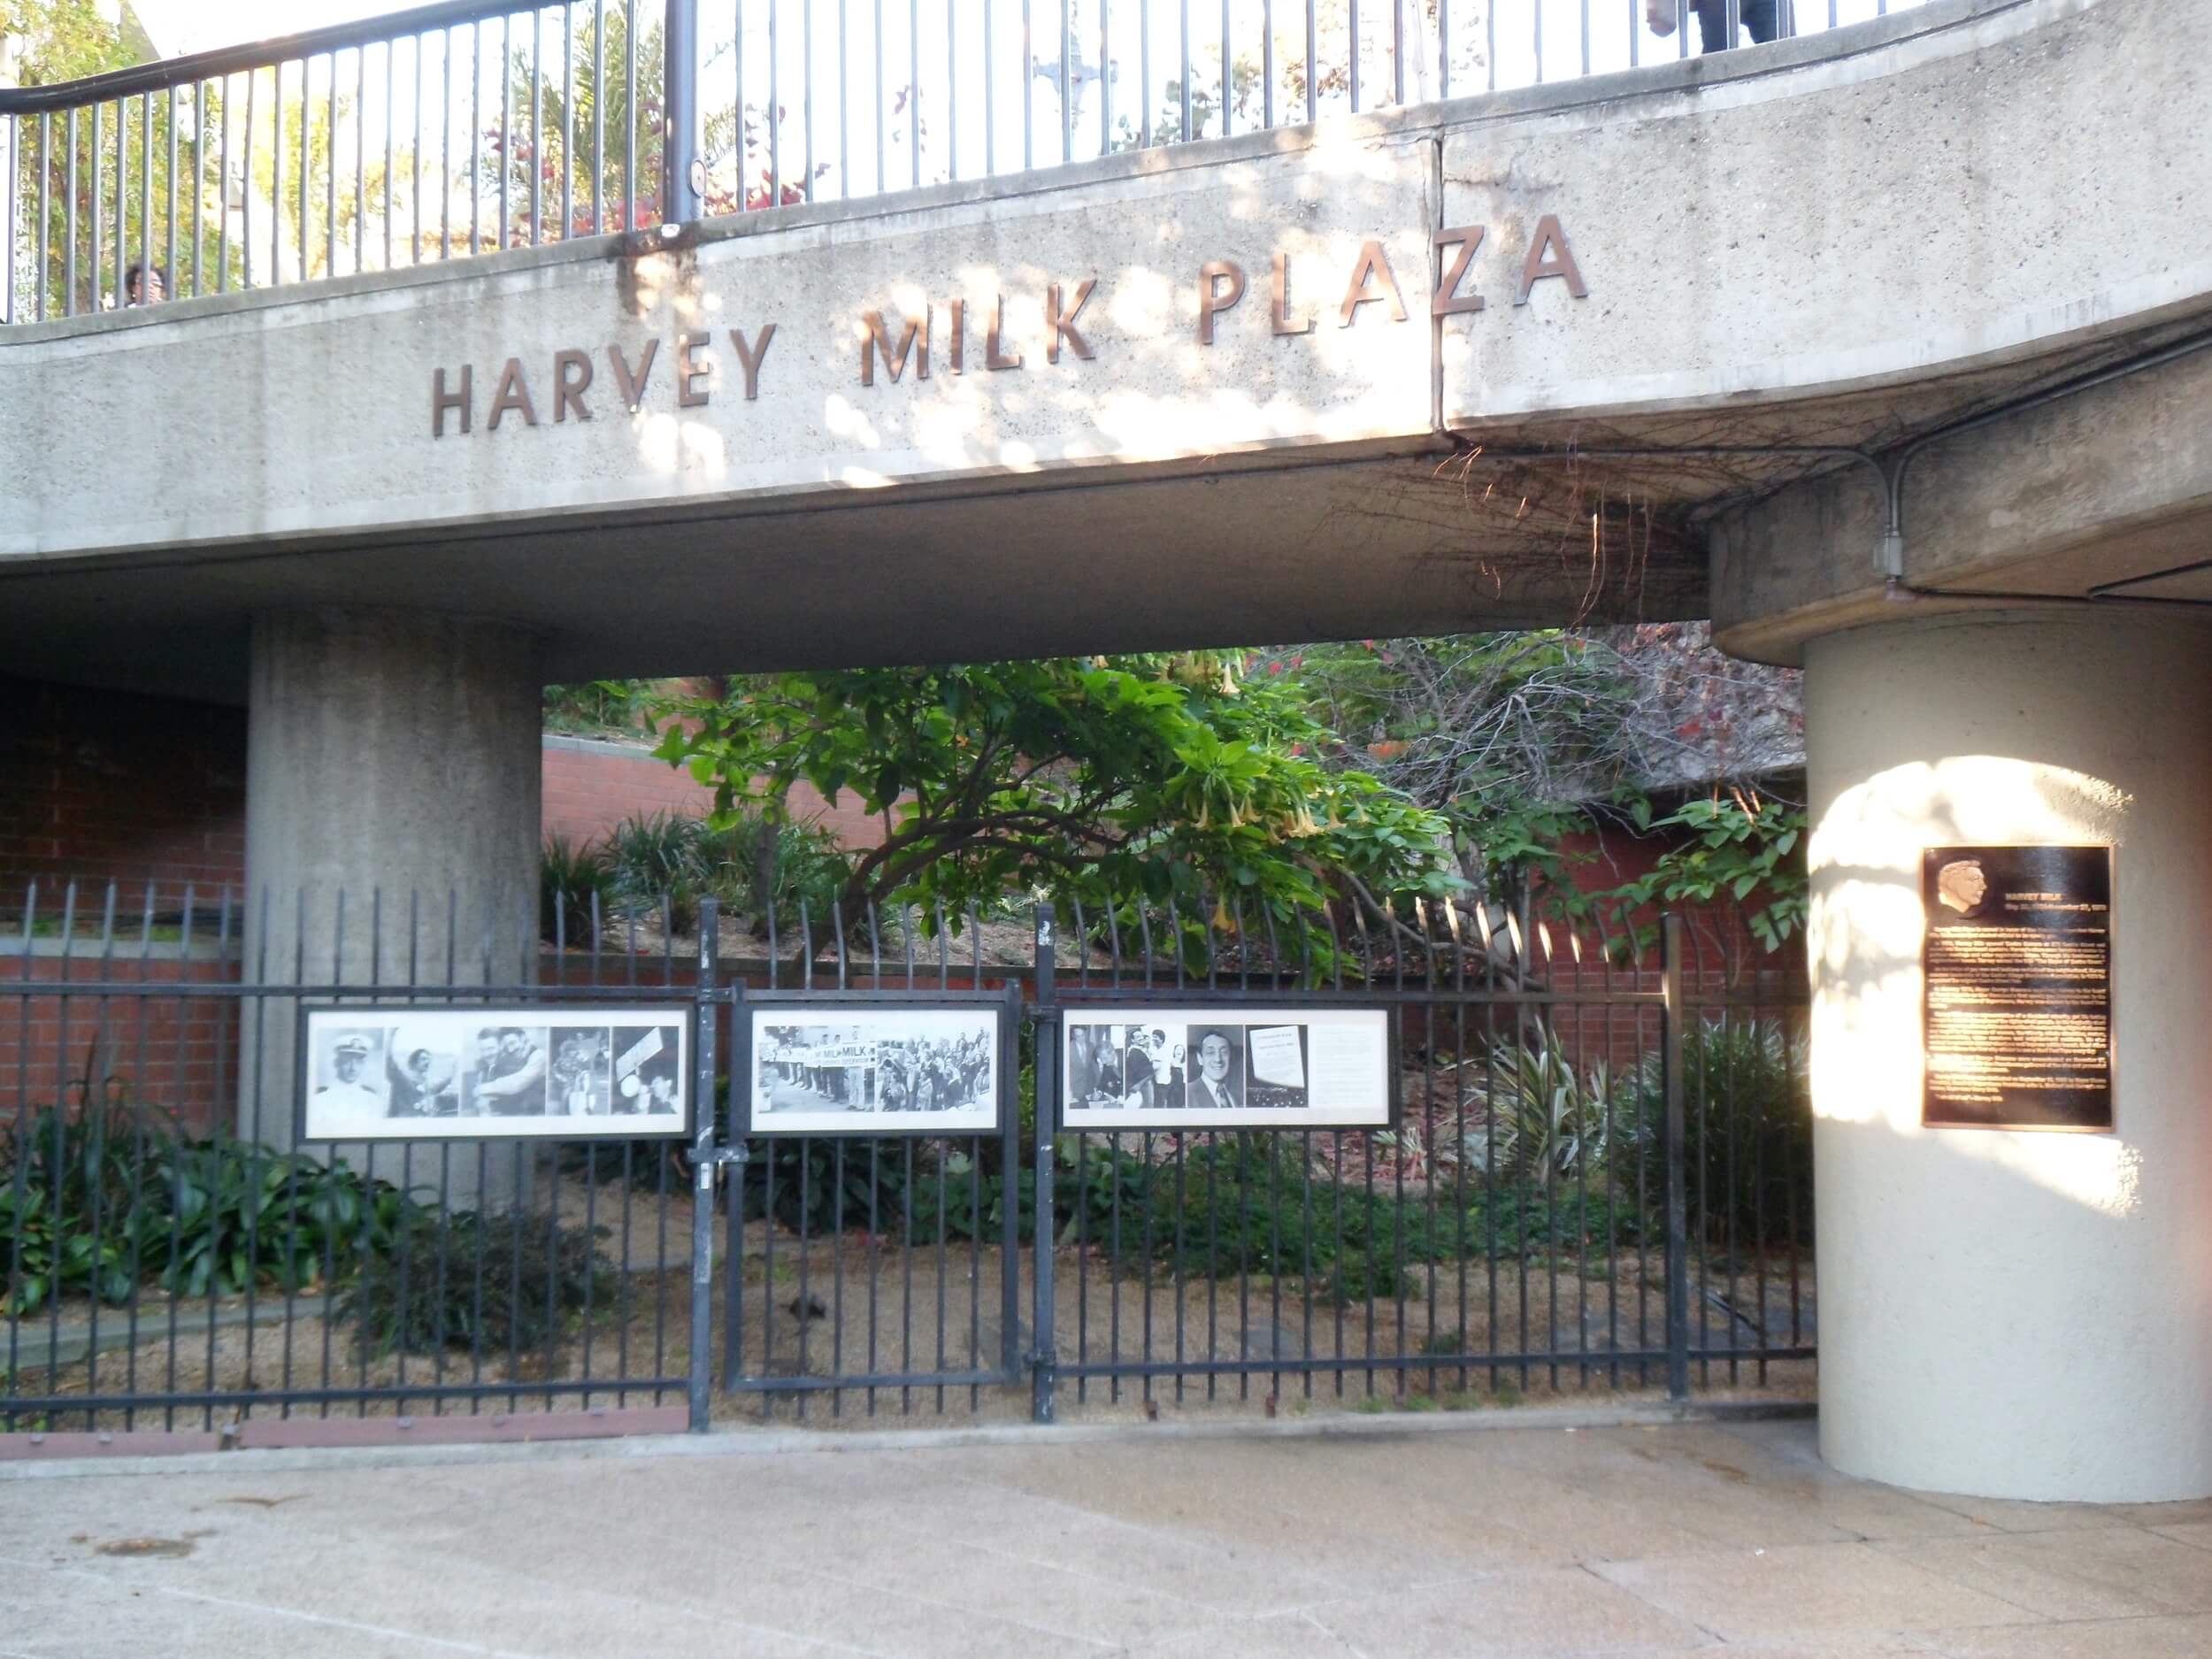 signage for harvey milk plaza, a transit plaza in san francisco